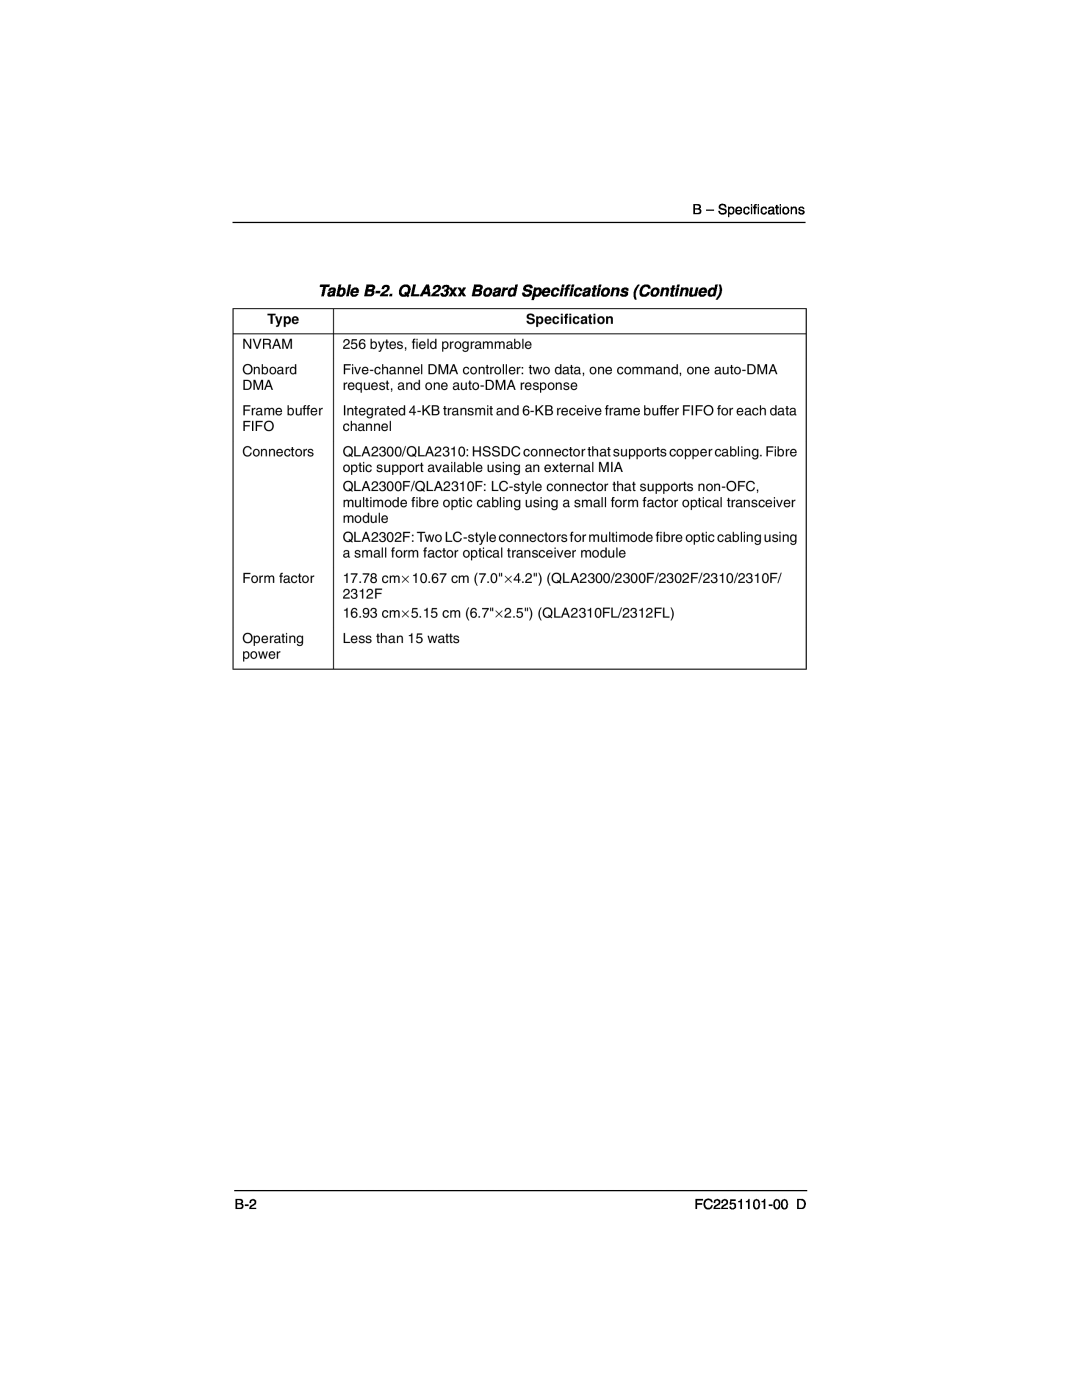 Q-Logic QLA2300 manual Table B-2. QLA23xx Board Specifications Continued 